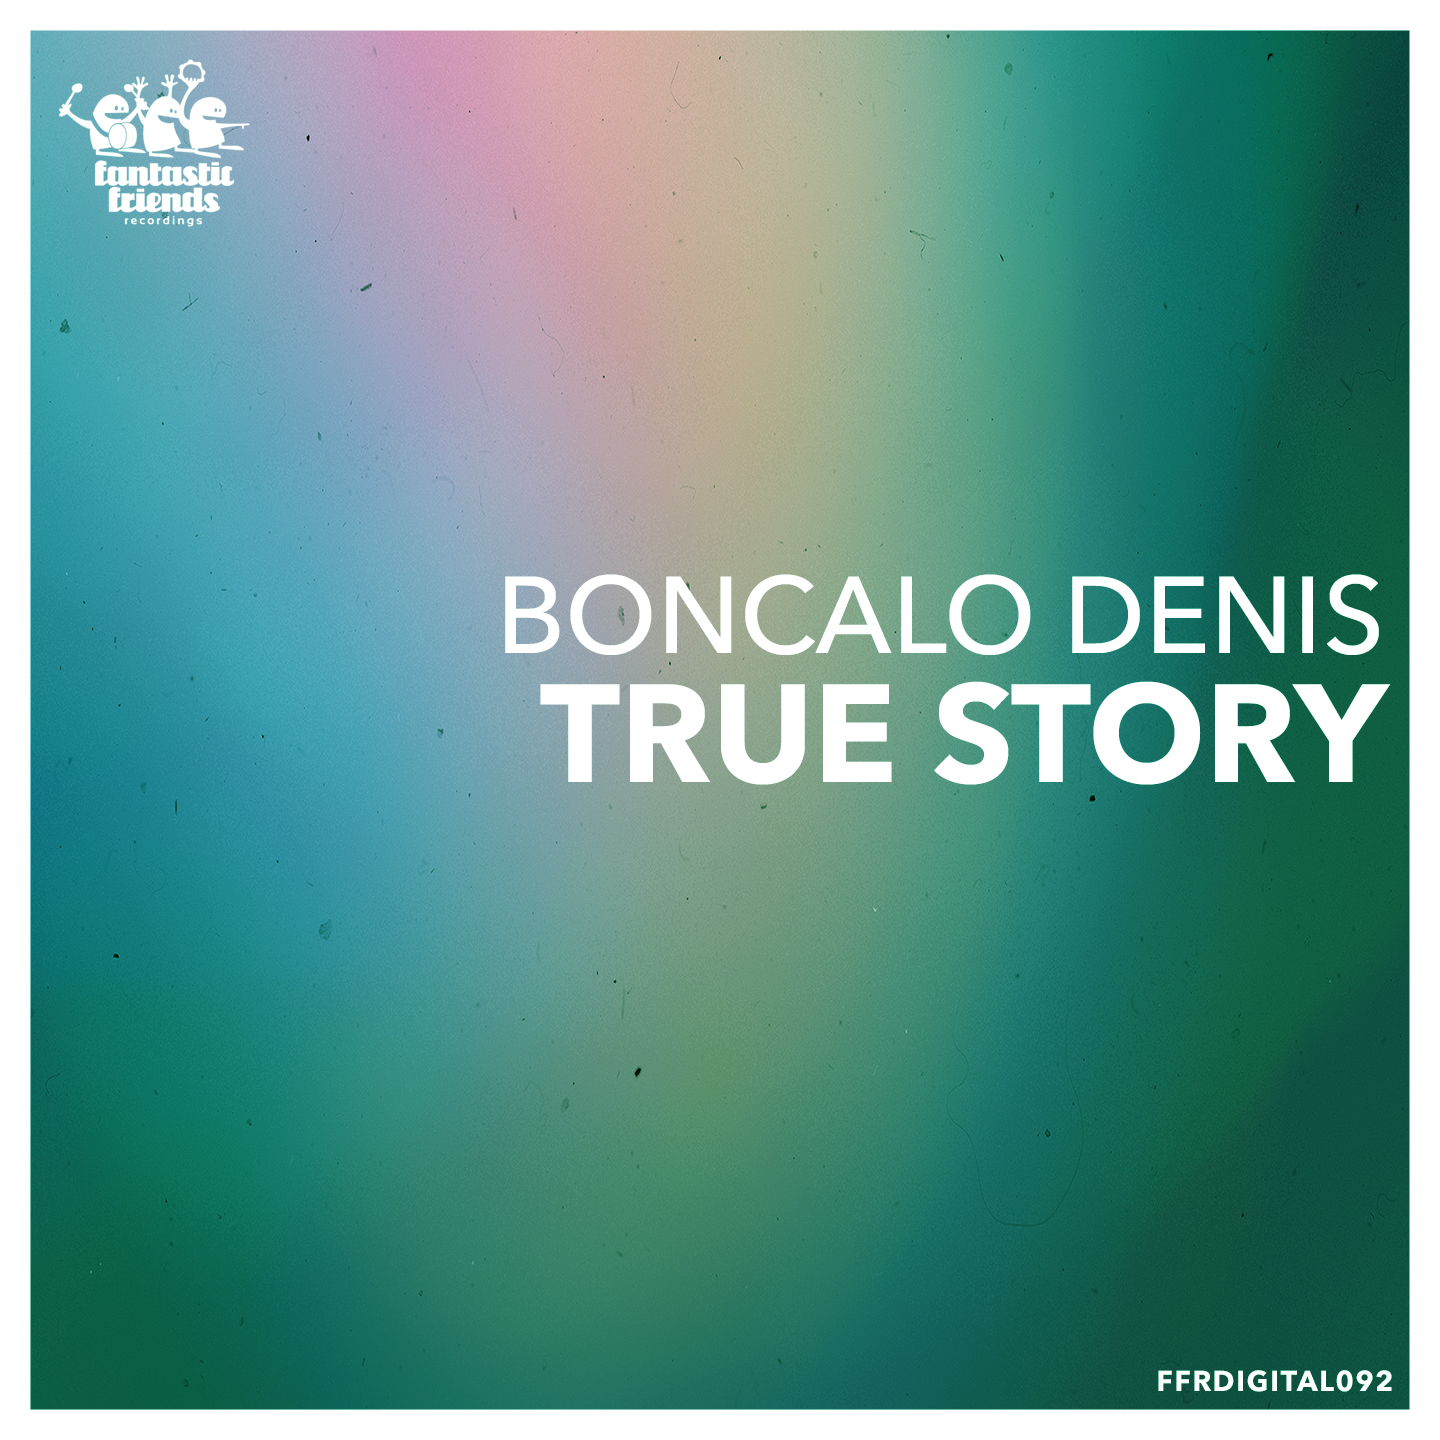 BONCALO DENIS - TRUE STORY